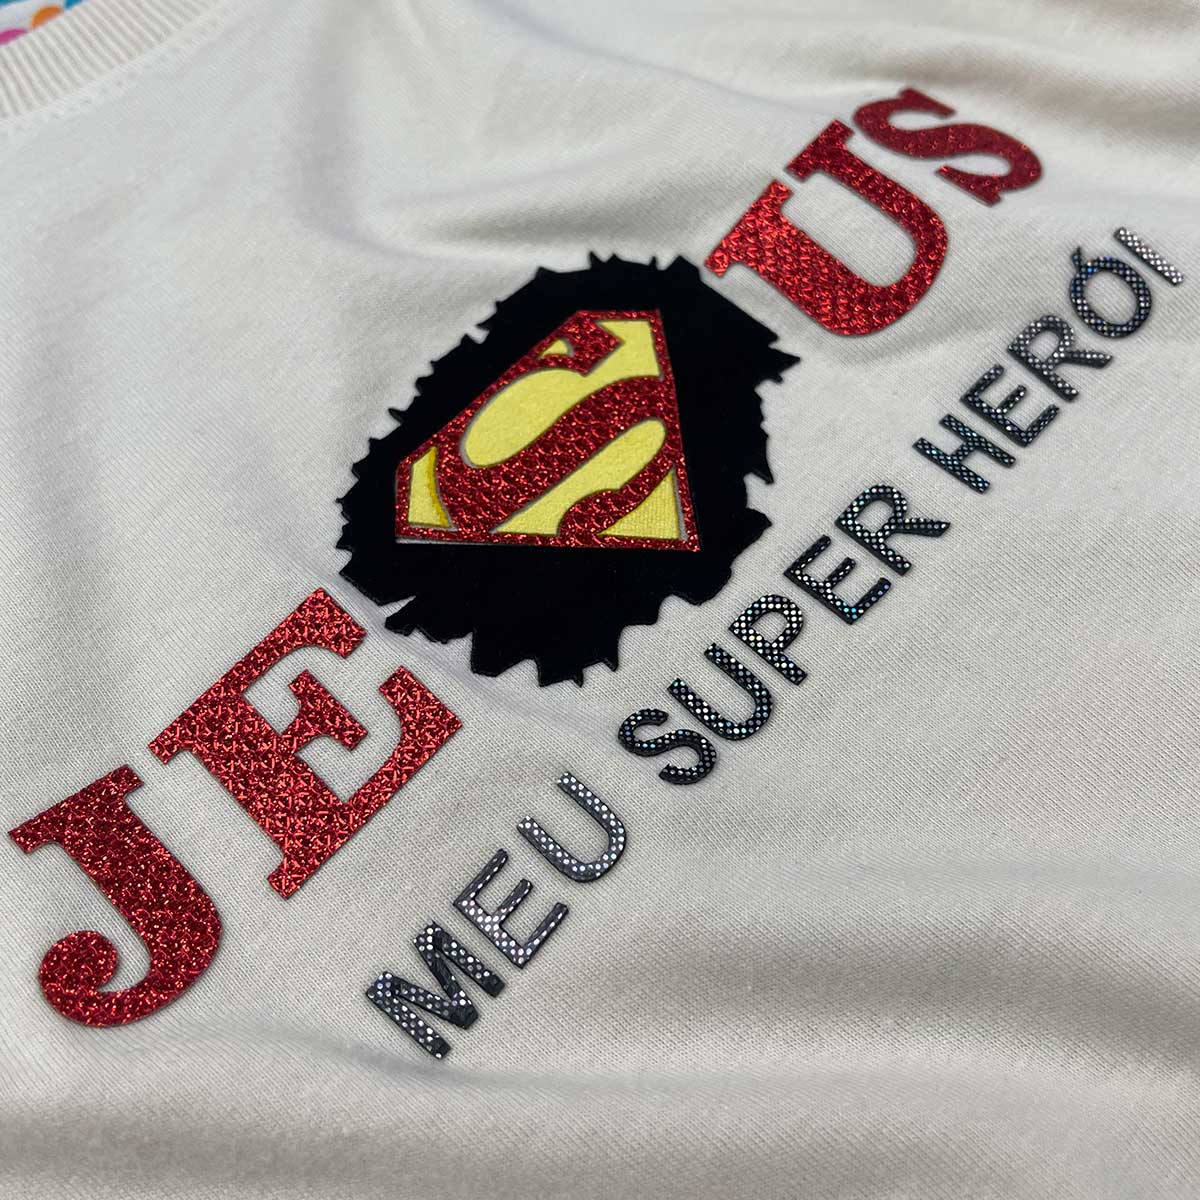 T-Shirt Infantil Off White Jesus Meu Super Herói